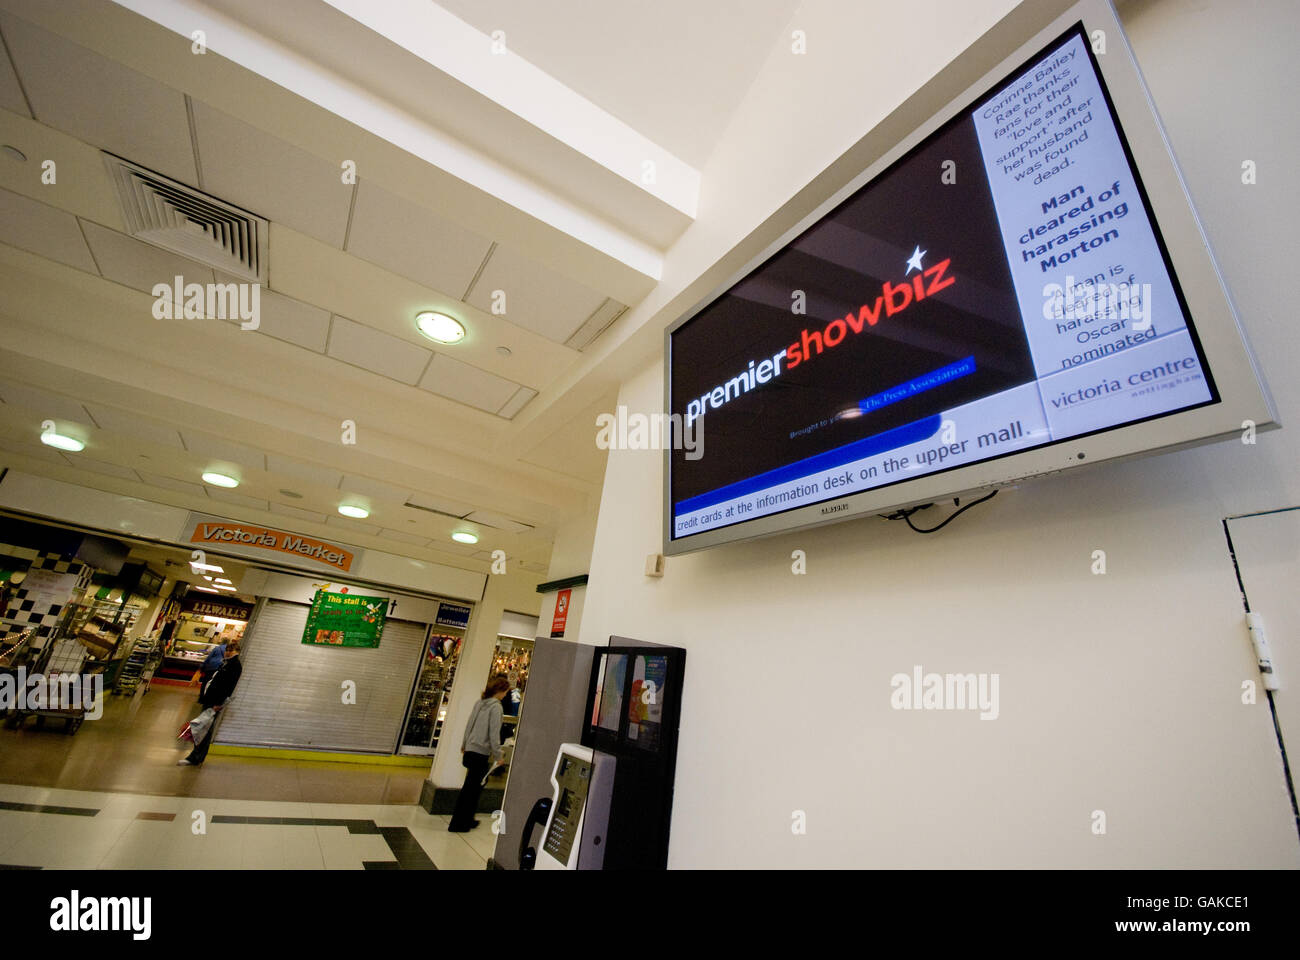 Premier Showbiz report at the Victoria Centre shopping centre, Nottingham Stock Photo